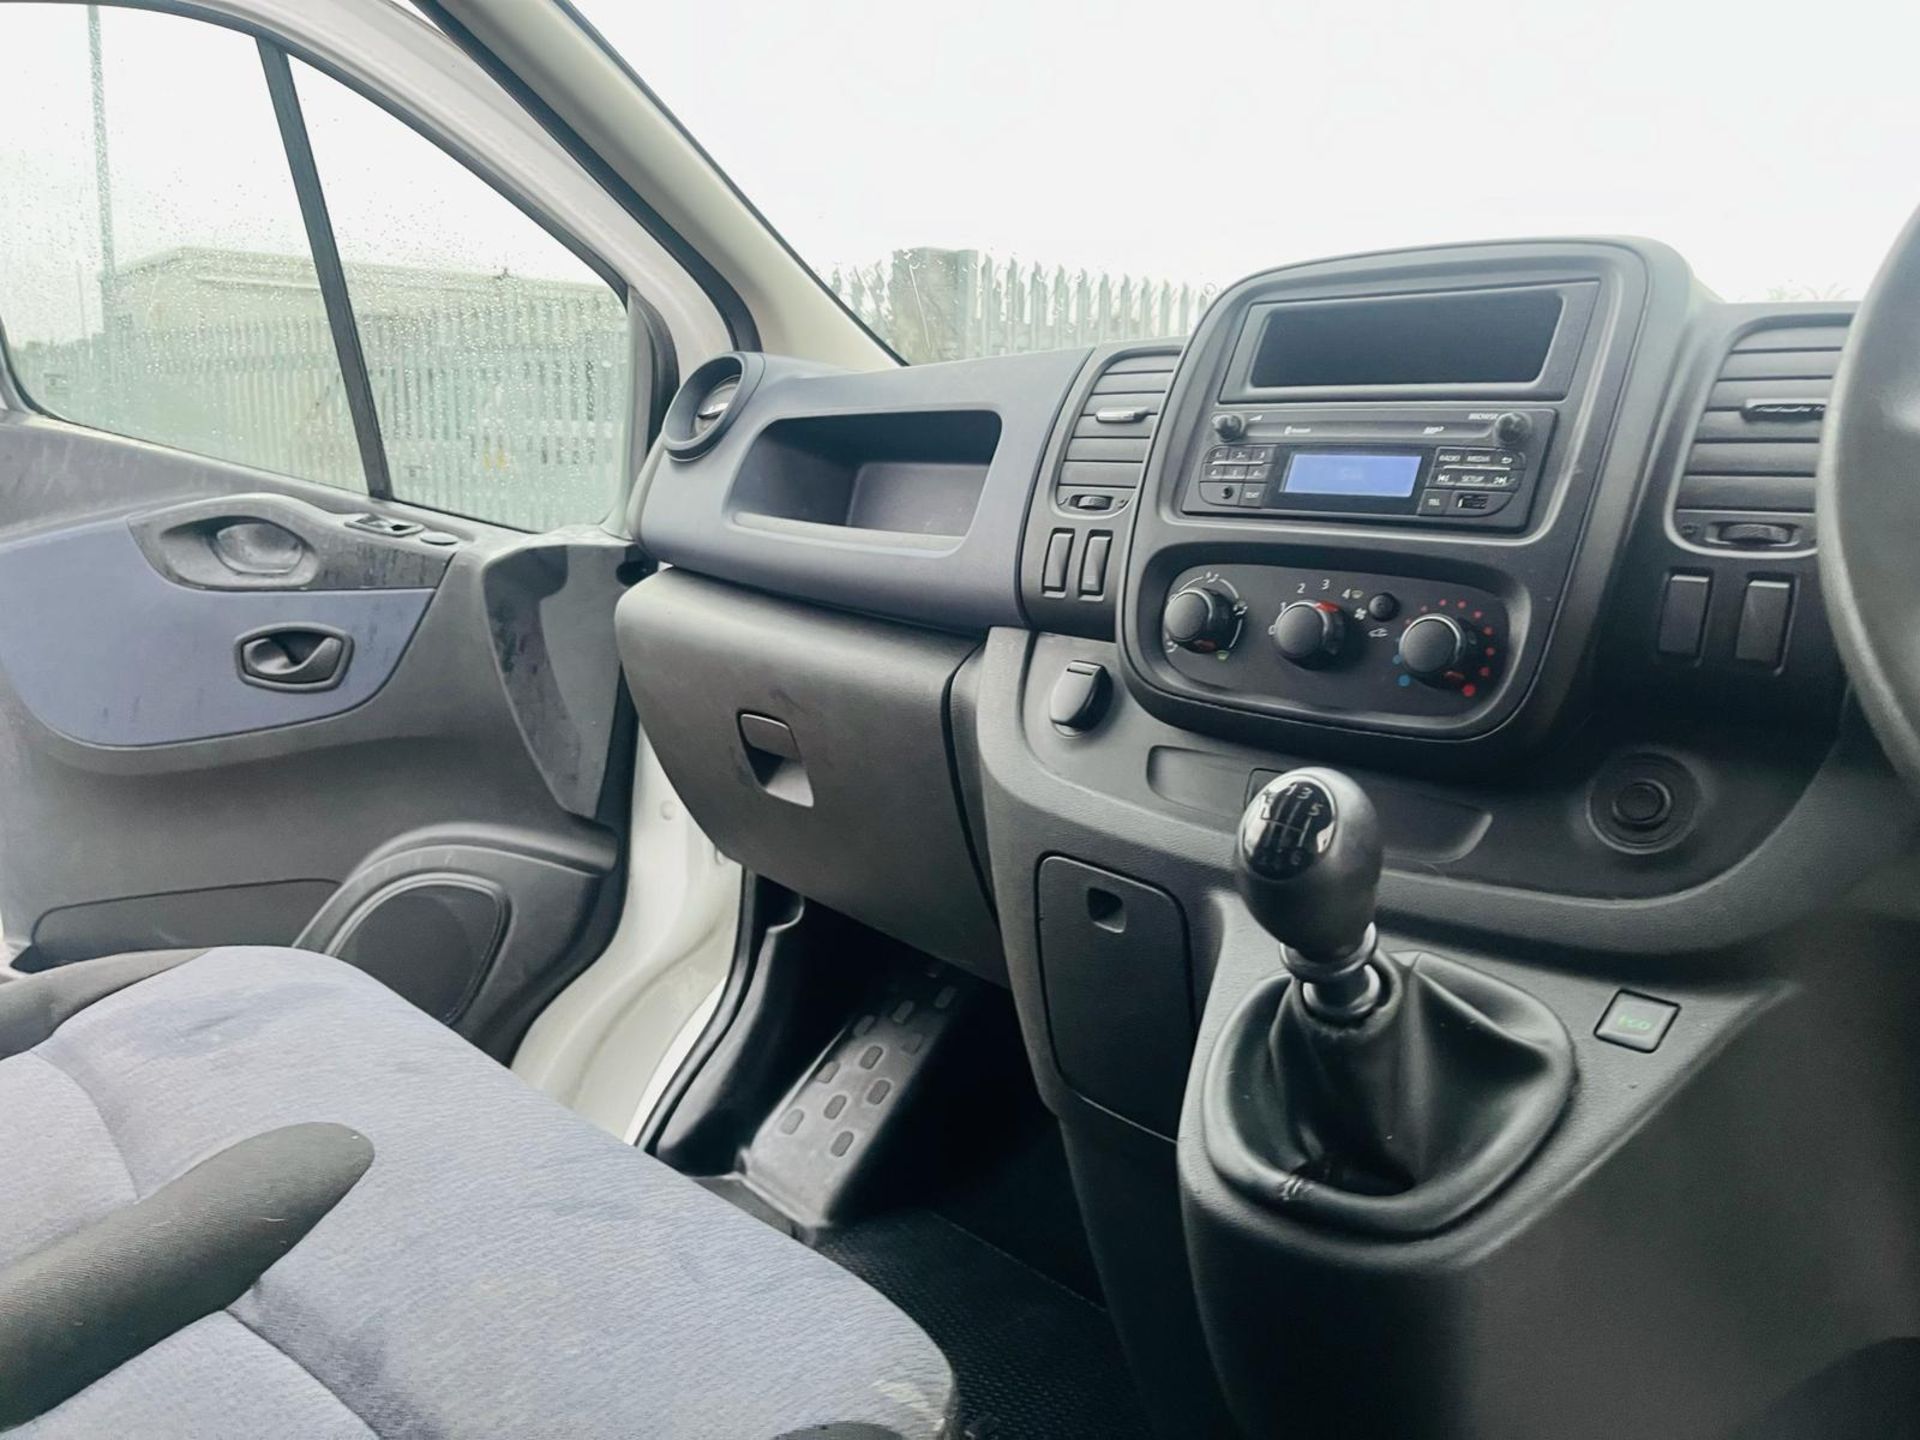 ** ON SALE ** Vauxhall Vivaro 1.6 CDTI LWB L1 115 2015 '15 Reg' Panel Van - No Vat - Long wheel base - Image 19 of 27